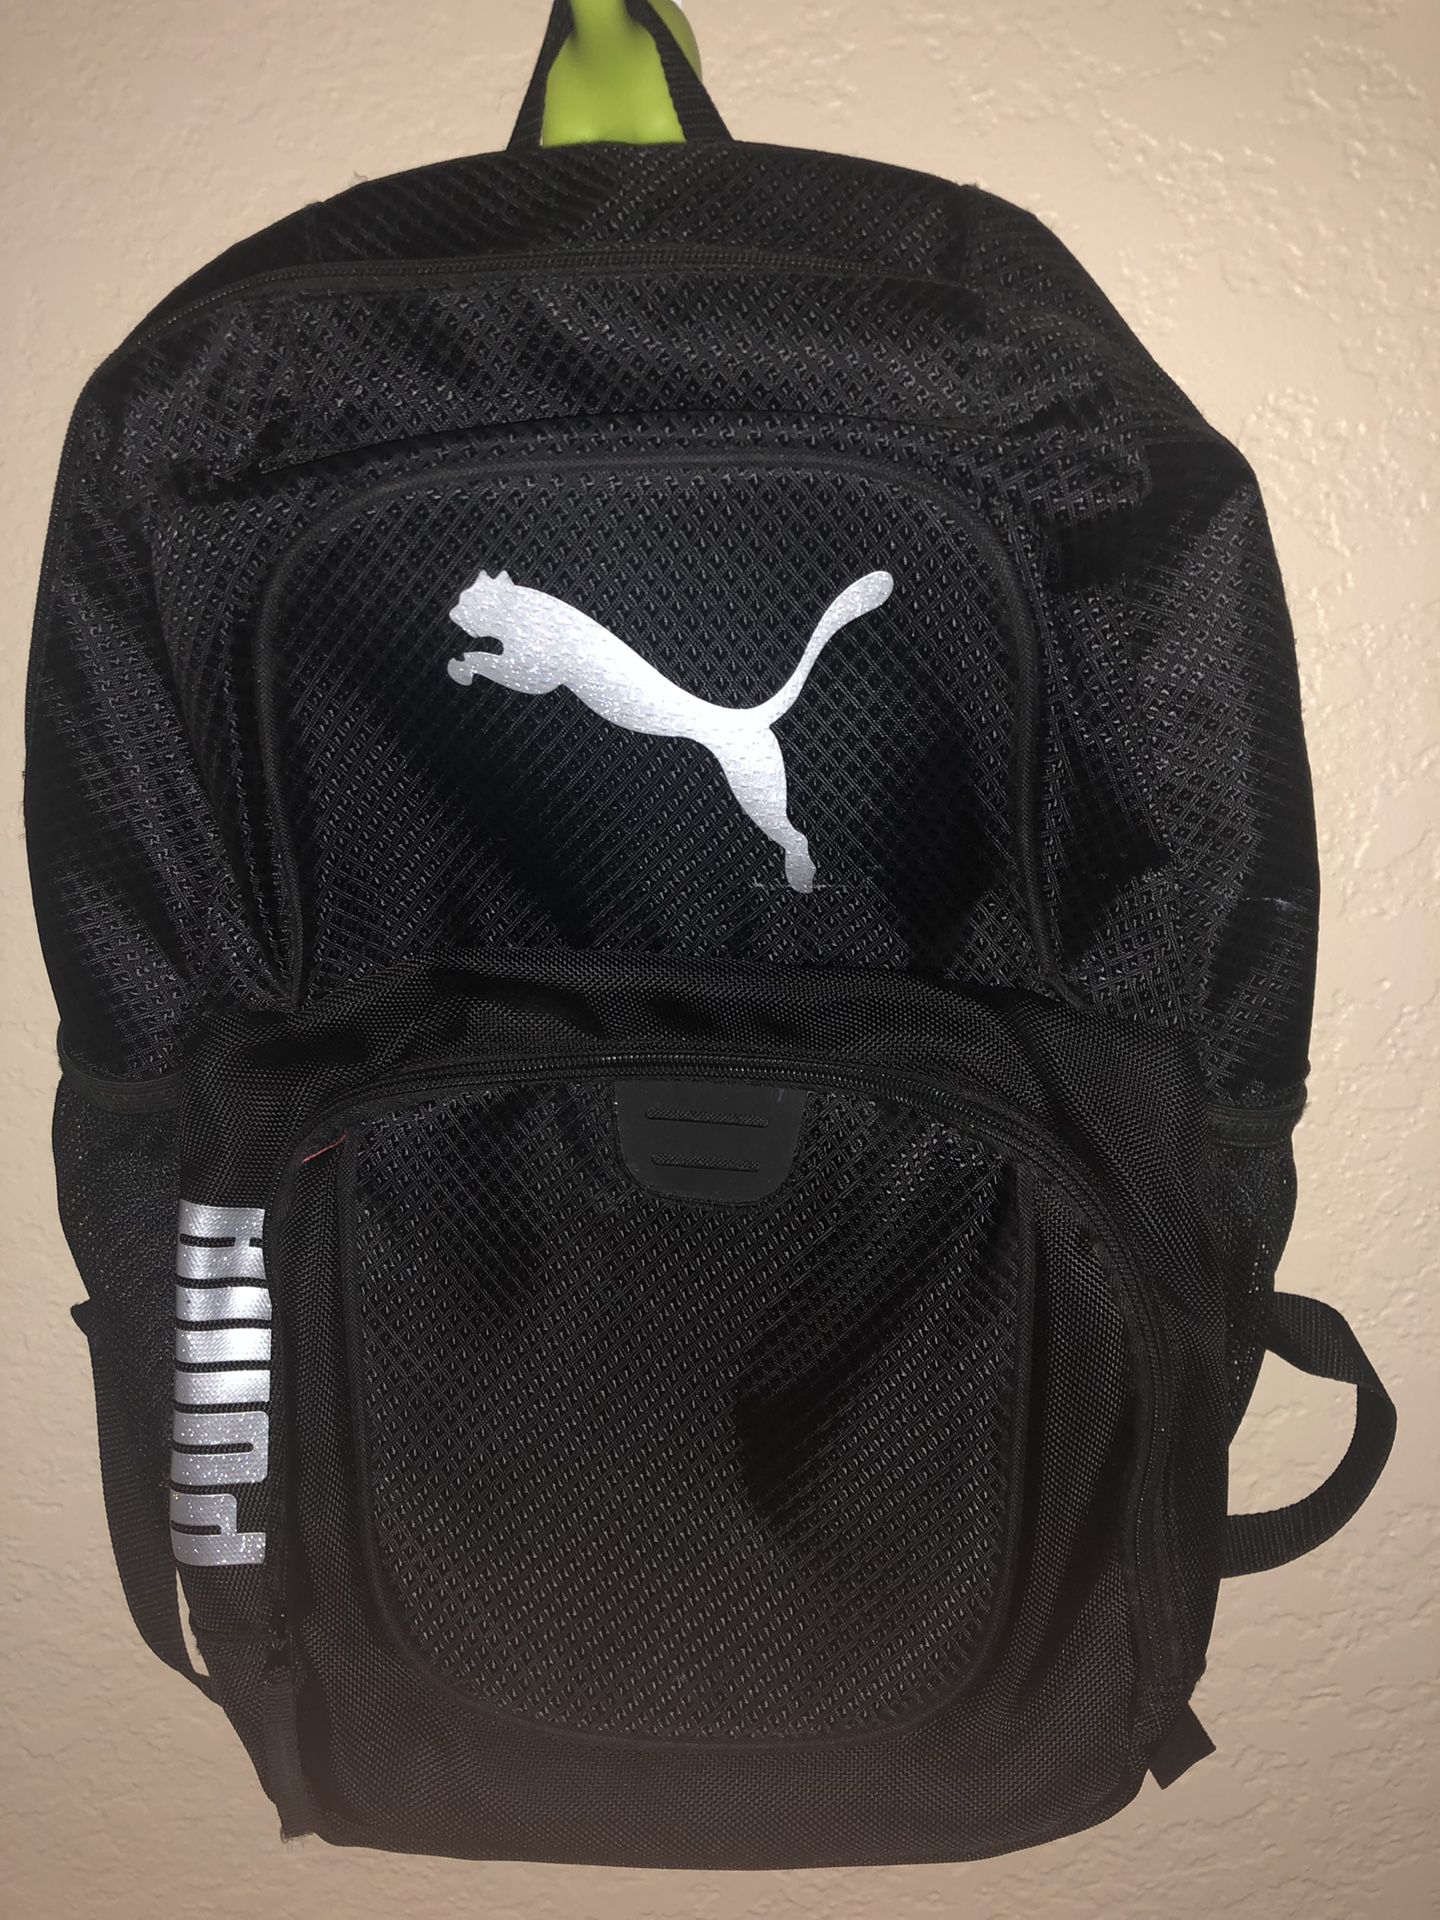 PUMA Backpack Travel Bag